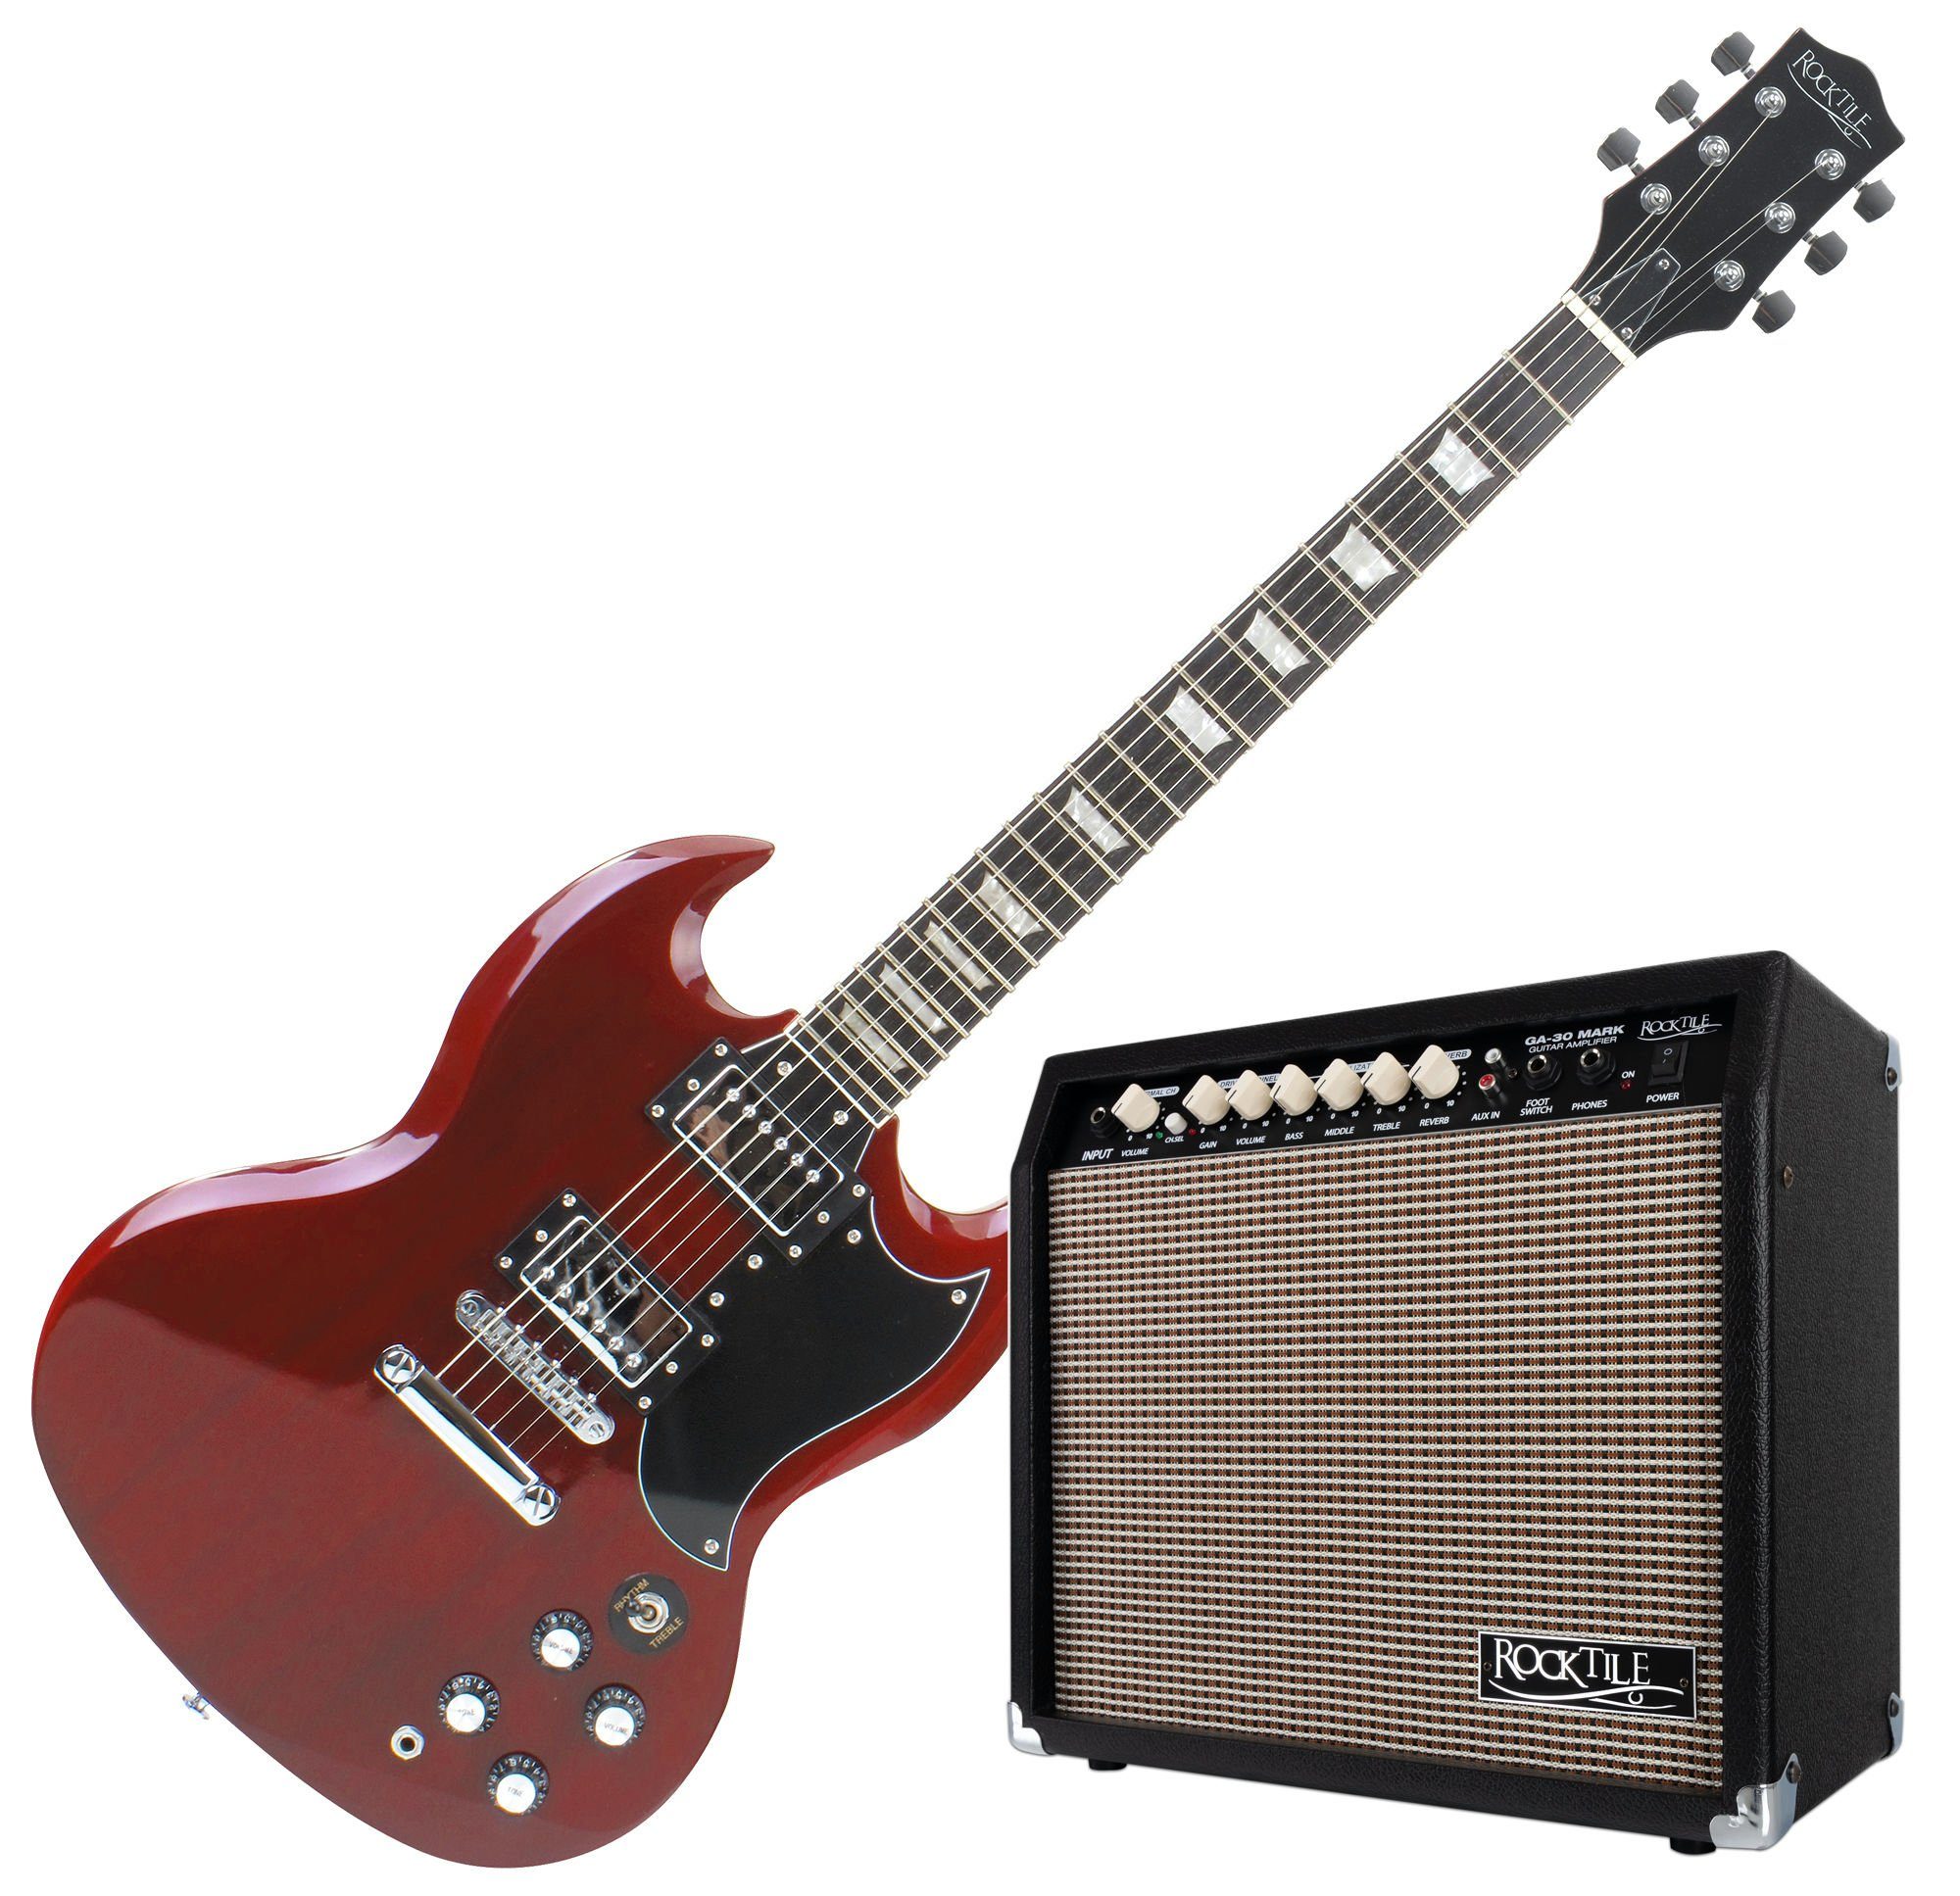 Rocktile E-Gitarre Pro S-Red E-Gitarre Heritage Cherry Verstärker Set - 2  Humbucker Tonabnehmer - Ahorn-Hals - 30 Watt Gitarrencombo mit 2 Kanälen -  8" Speaker - Gitarrenkabel, Set inkl. 30 Watt Gitarrencombo mit 2 Kanälen  (Clean/Drive)